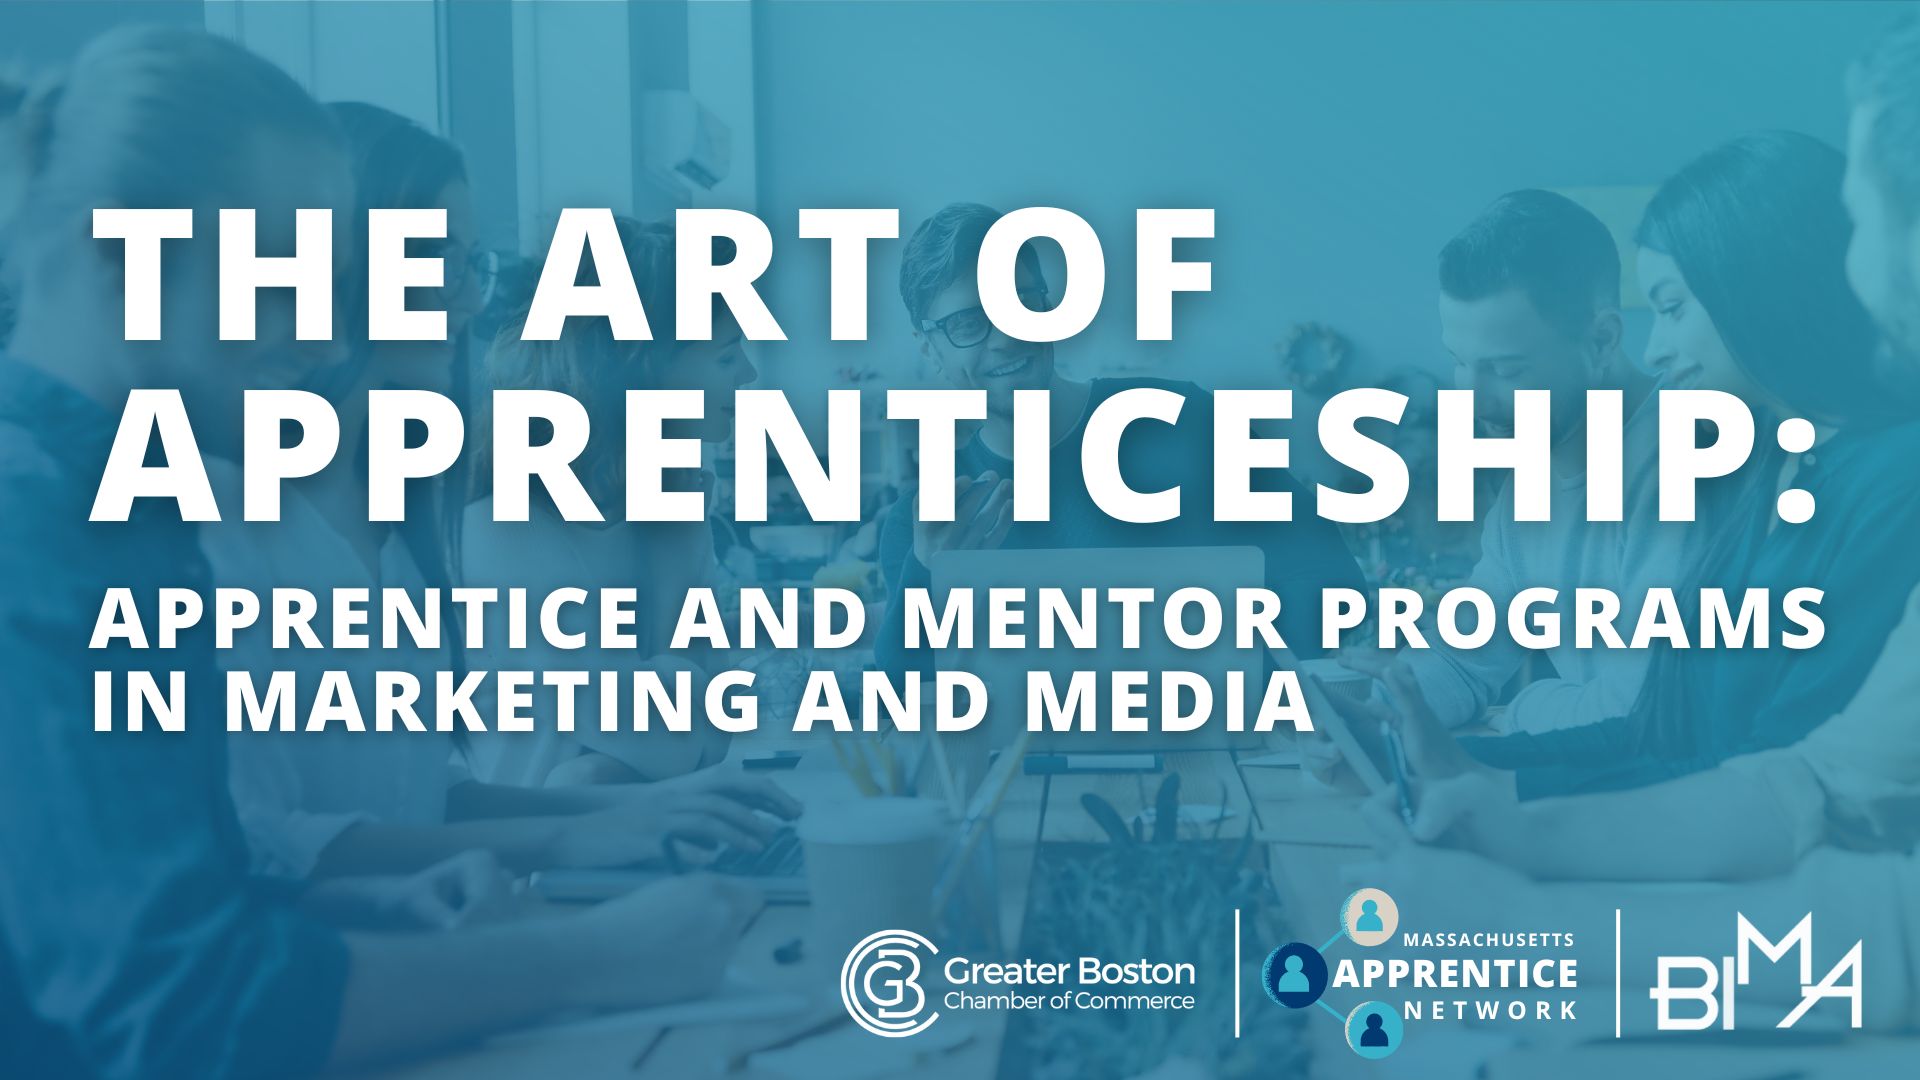 MA Apprentice Network, The Art of Apprenticeship event banner